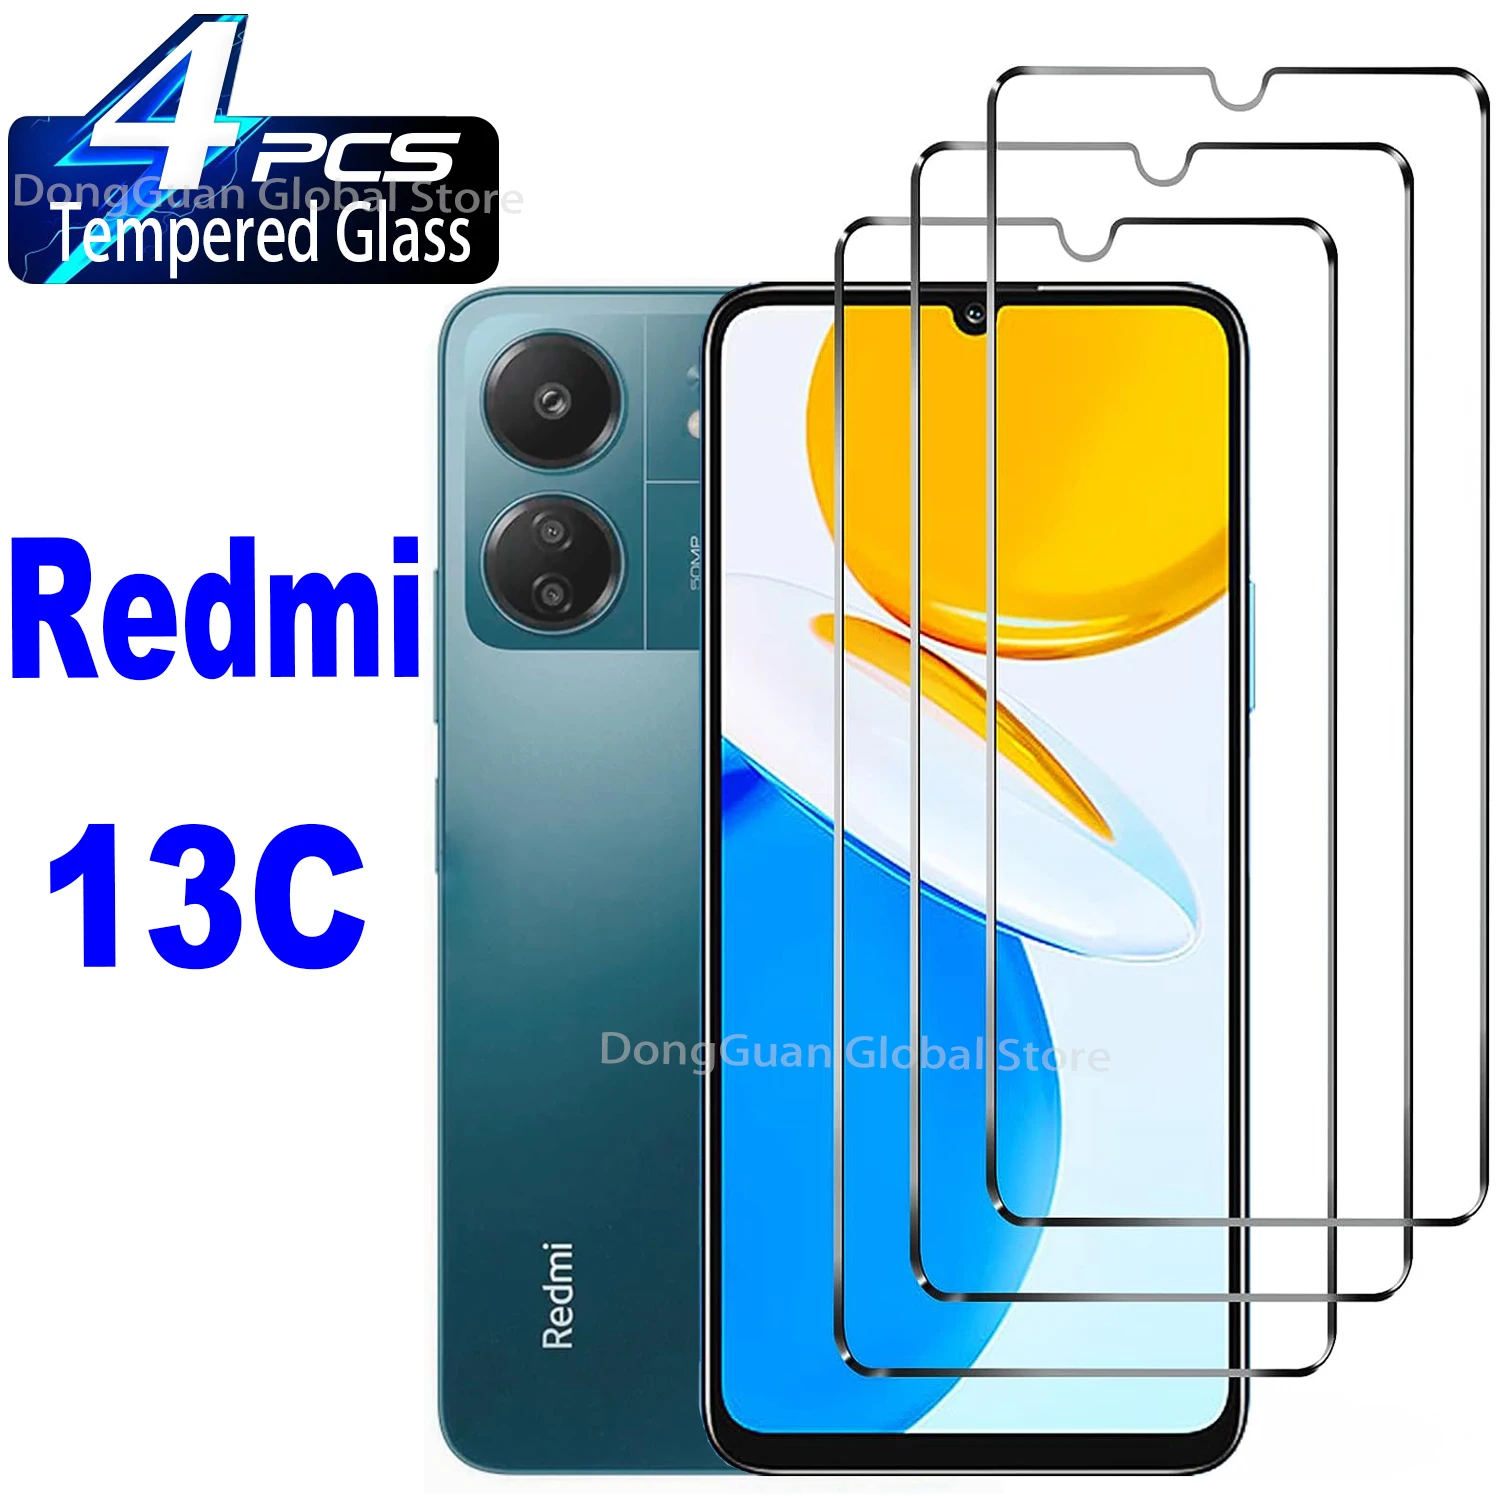 2/4Pcs Tempered Glass For Xiaomi Redmi 13C Screen Protector Glass Film protective tempered glass for xiaomi redmi 10 prime 2022 screen protector on redmi10 10prime film xiomi ksiomi readmi remi redmy